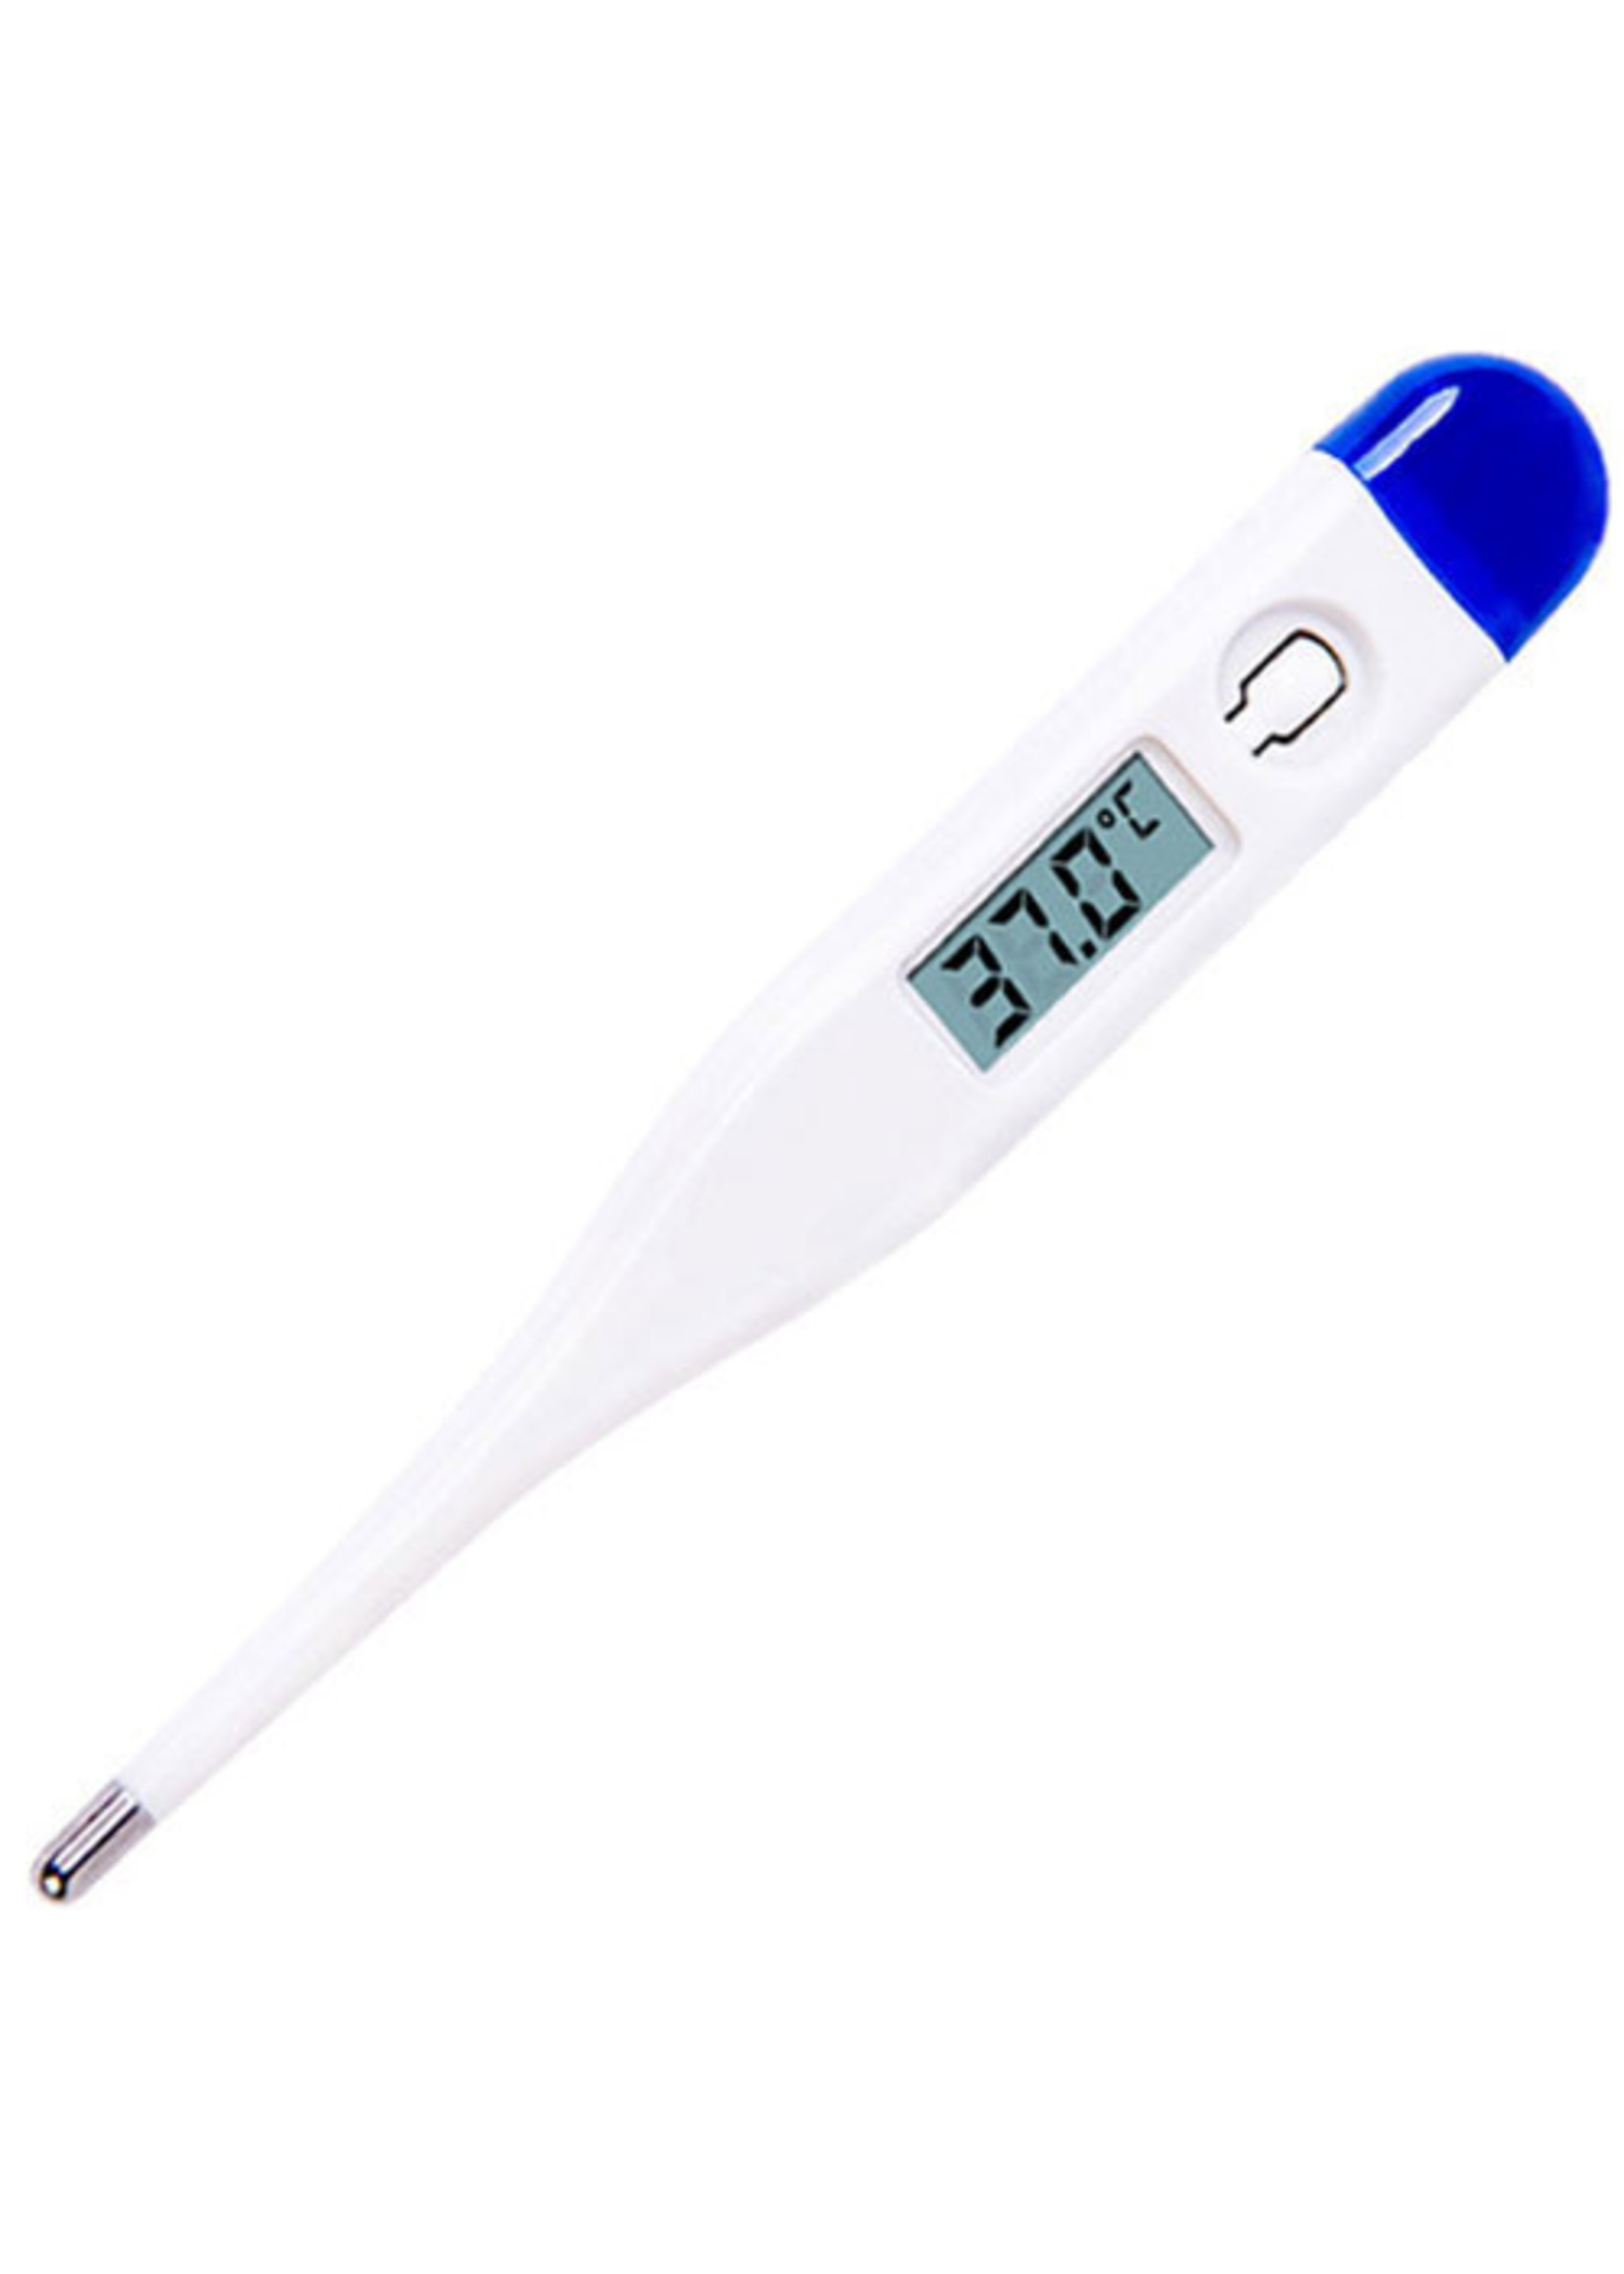 Display Digital Thermometer